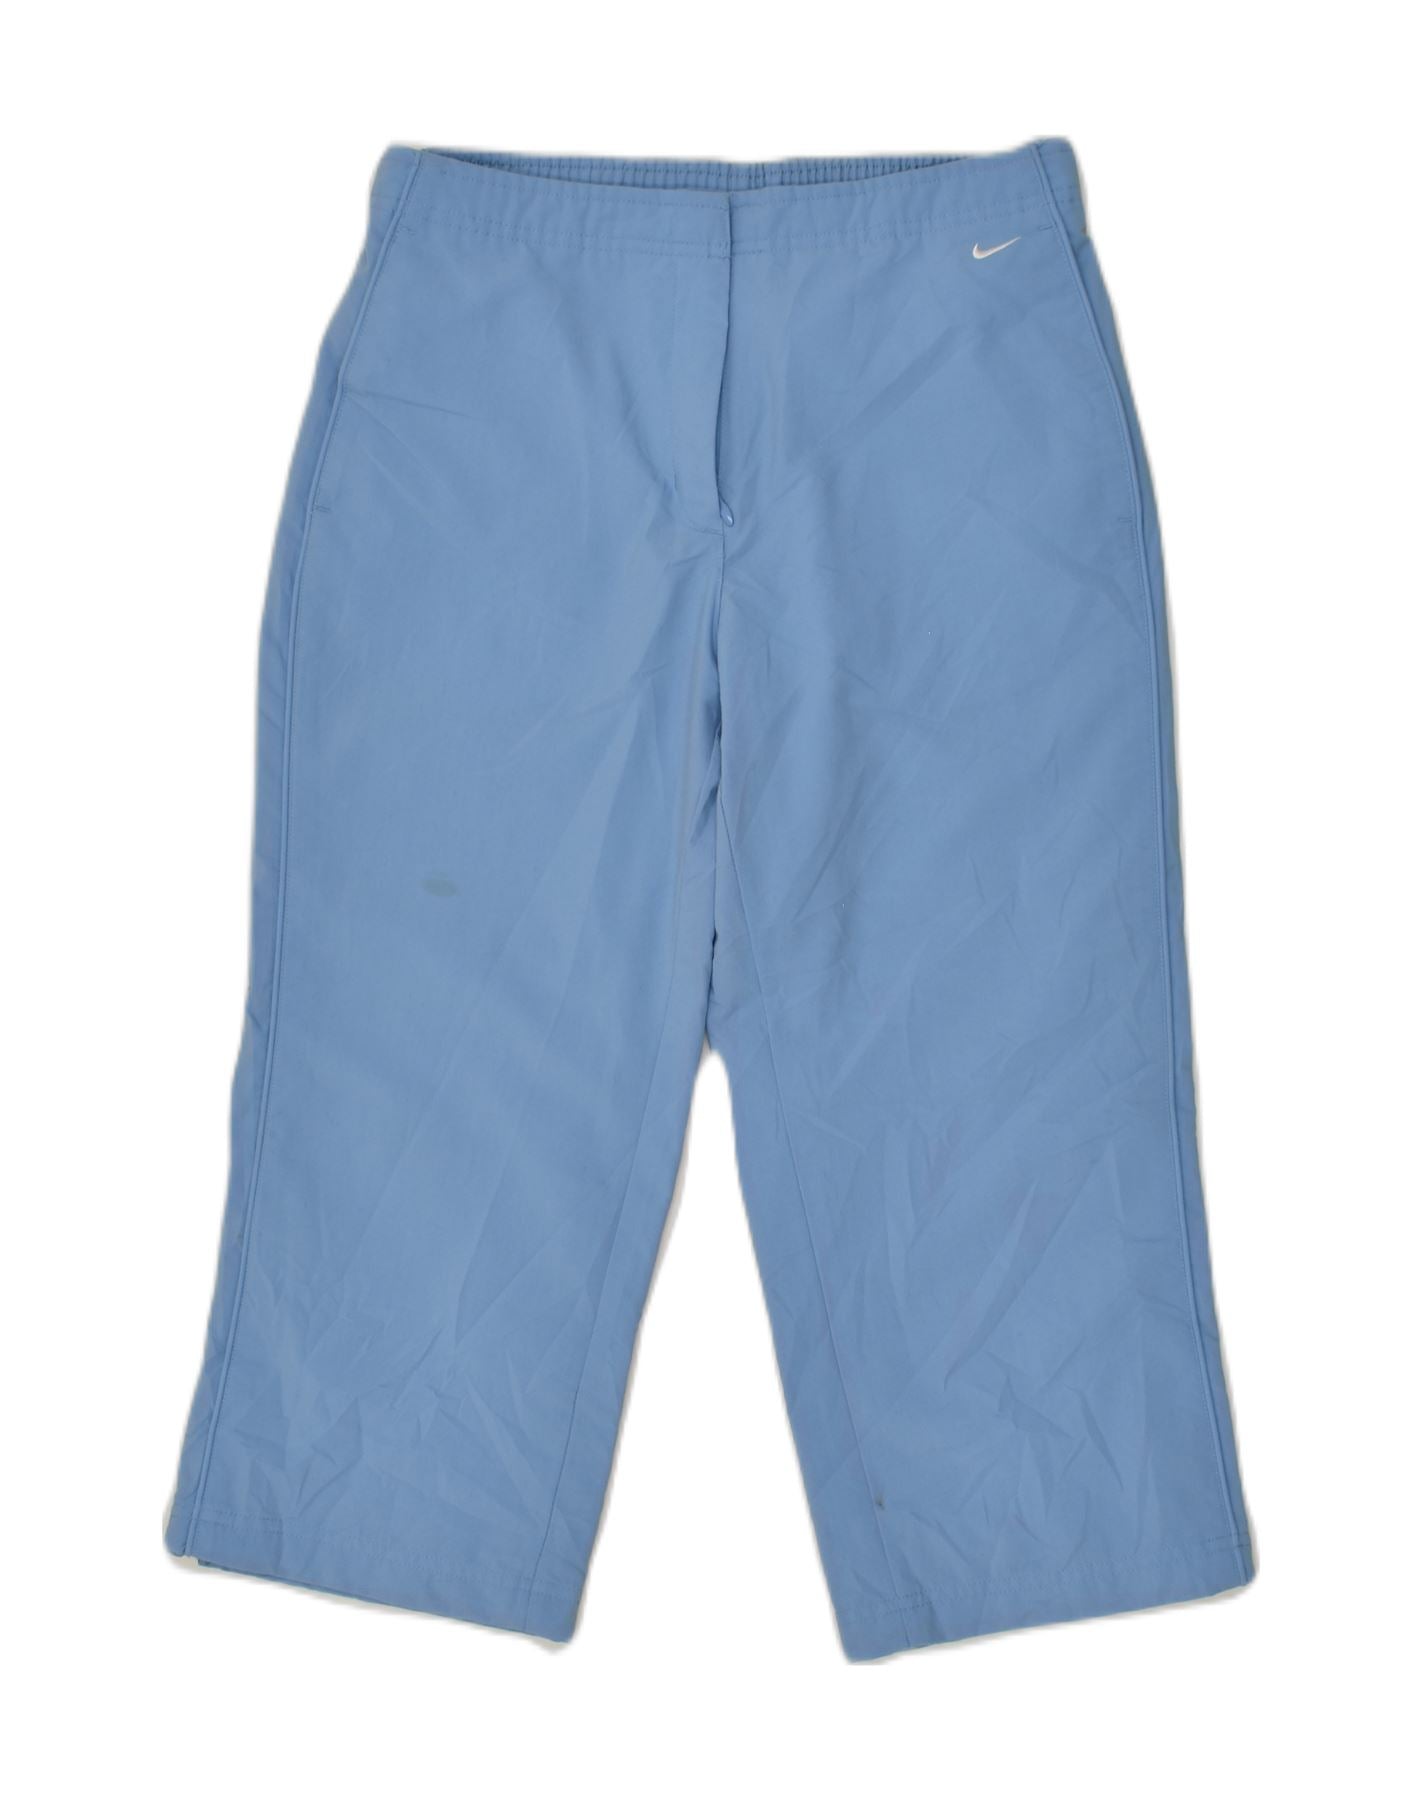 NIKE Womens Capri Tracksuit Trousers UK 8-10 Small Blue Polyester